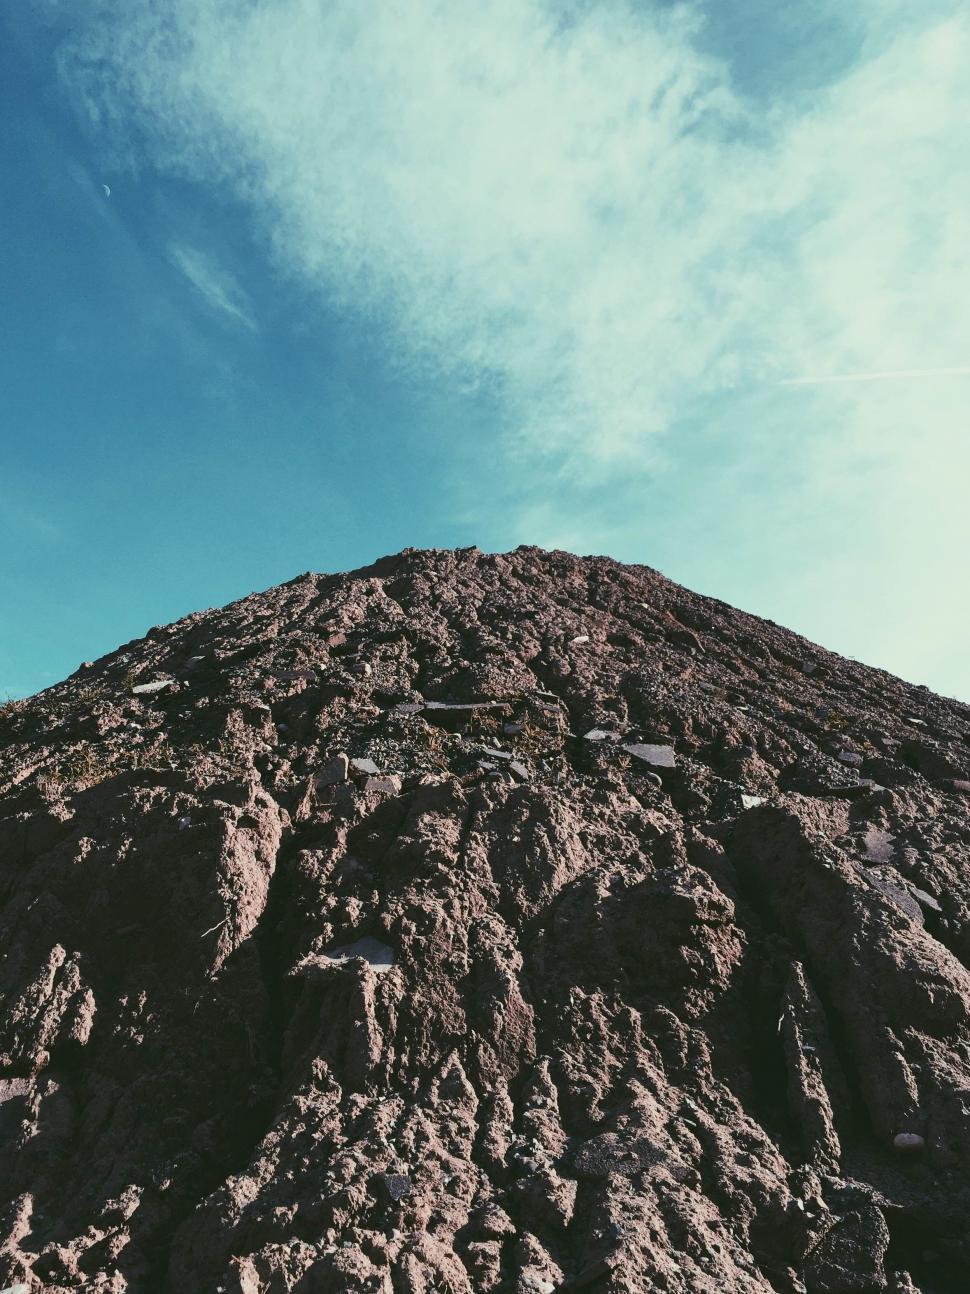 Free Image of Large Mound of Dirt Under Blue Sky 